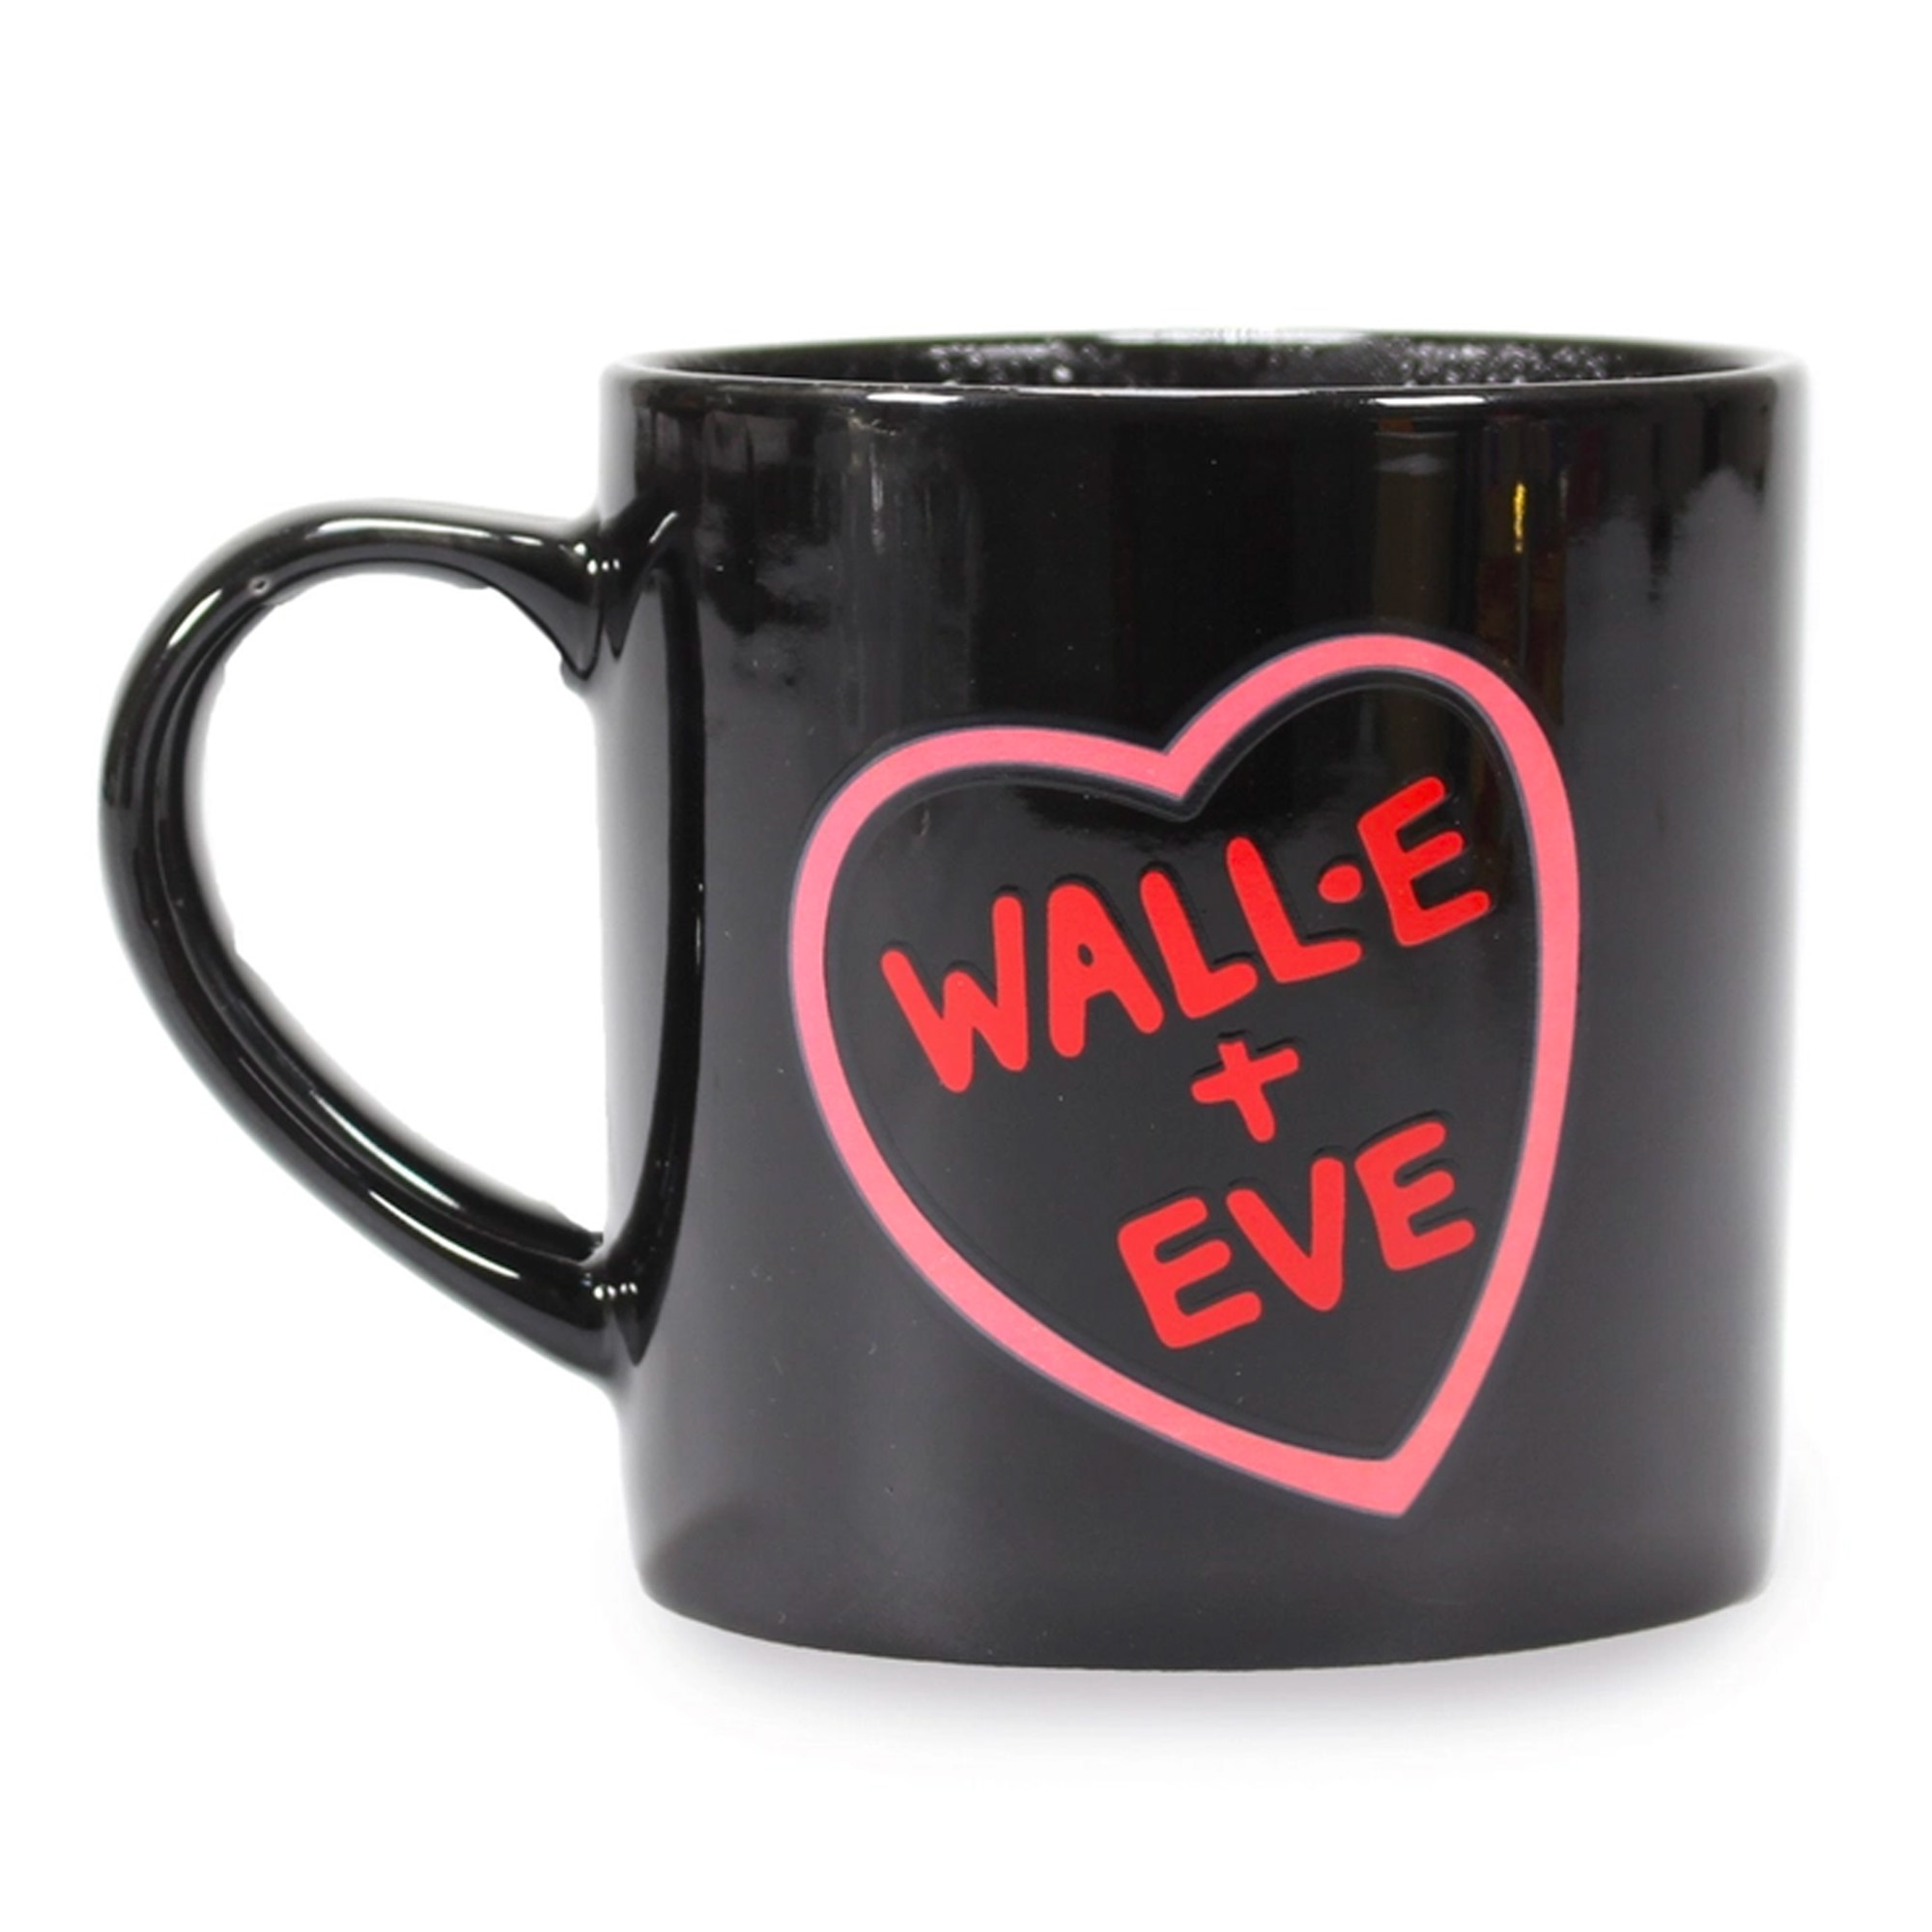 Wall-E + Eve Thermoeffekt Tasse - Disney Wall-E